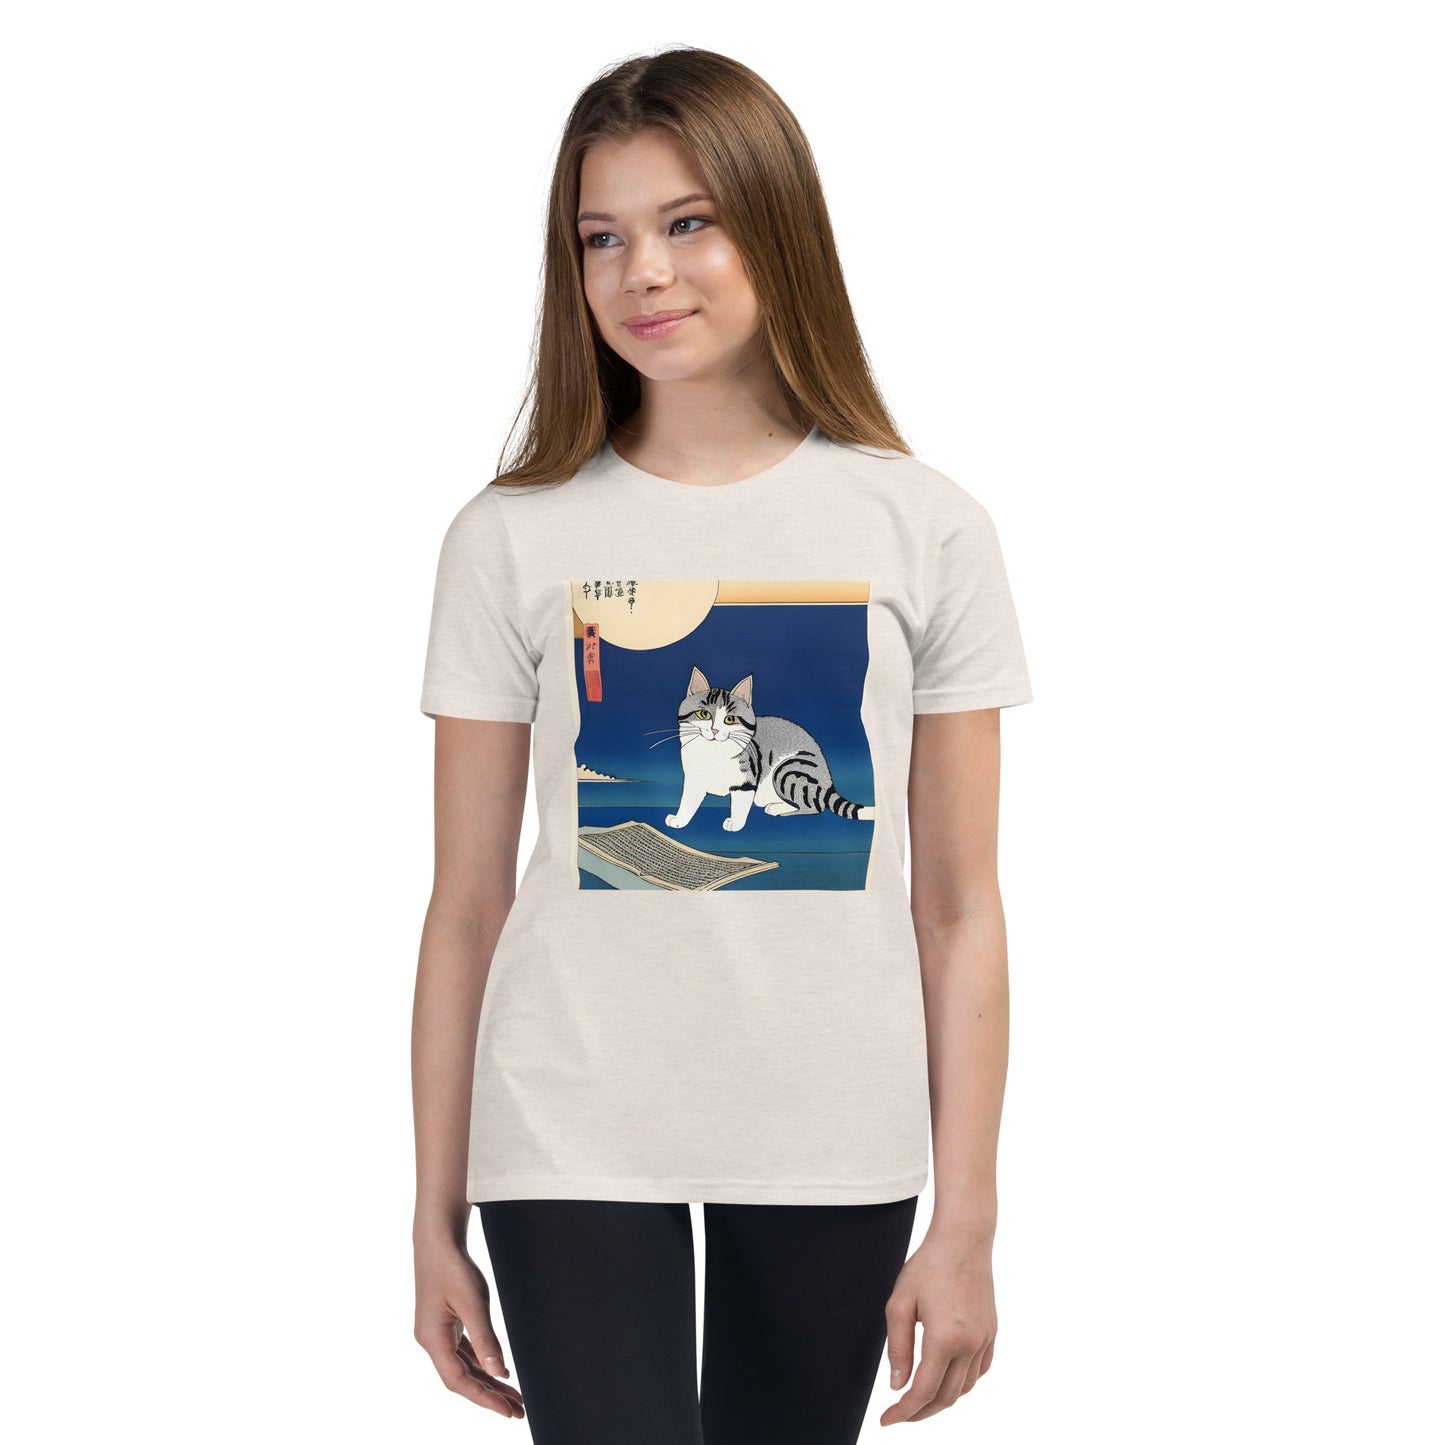 Meowsome Kid's T-Shirt - 027